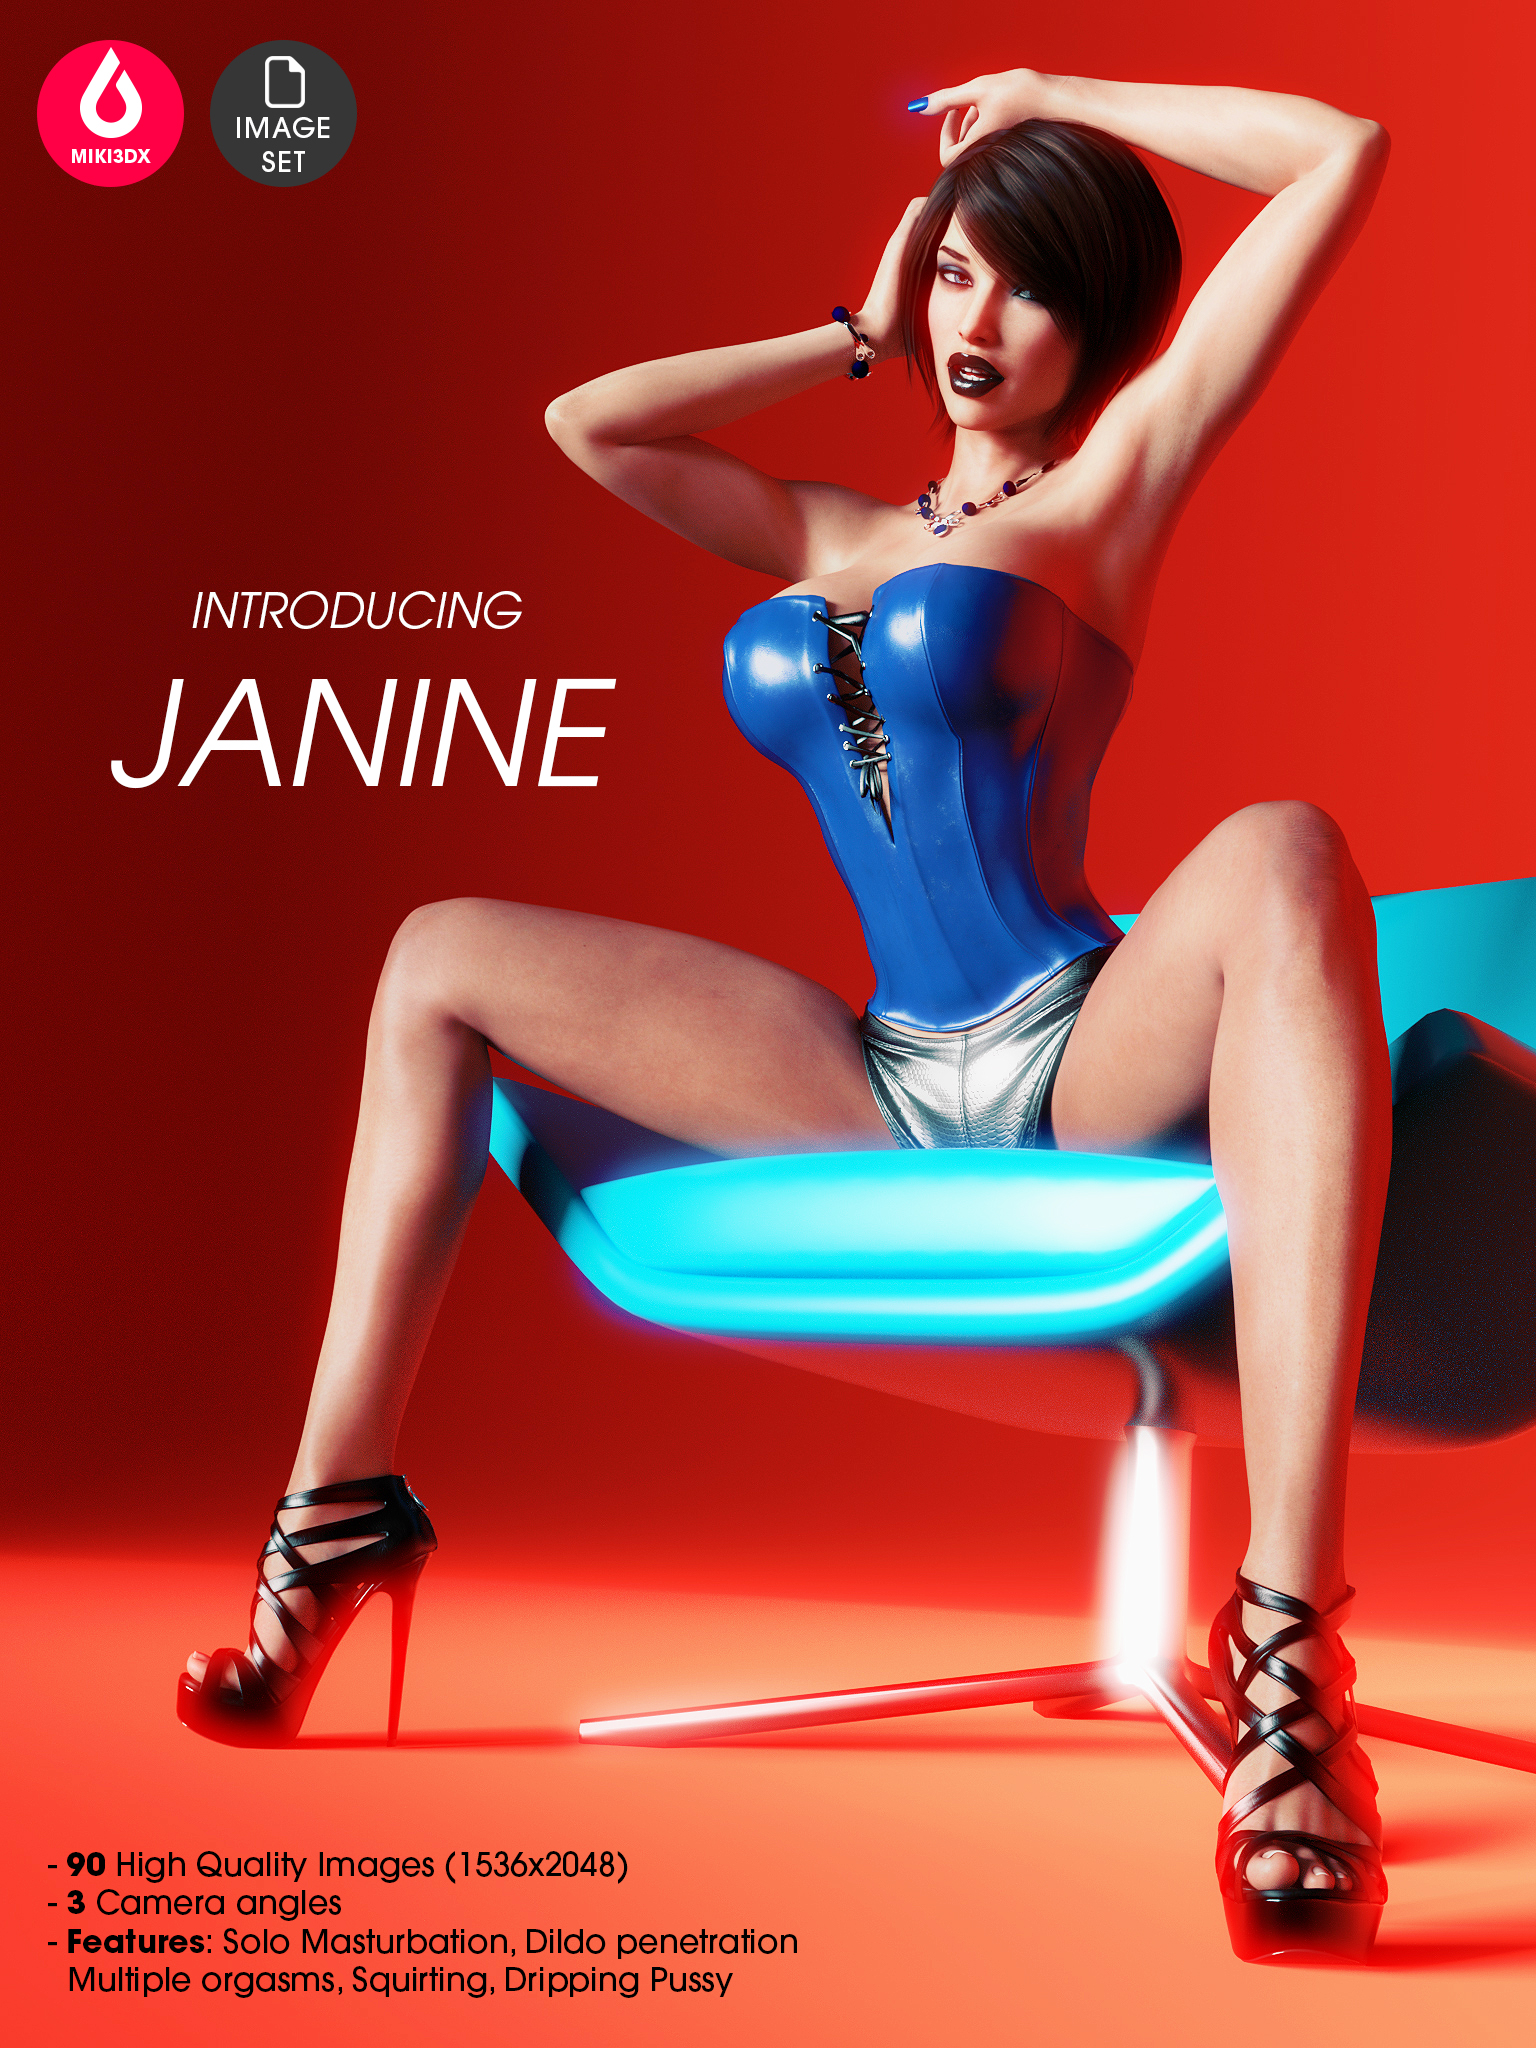 Introducing Janine